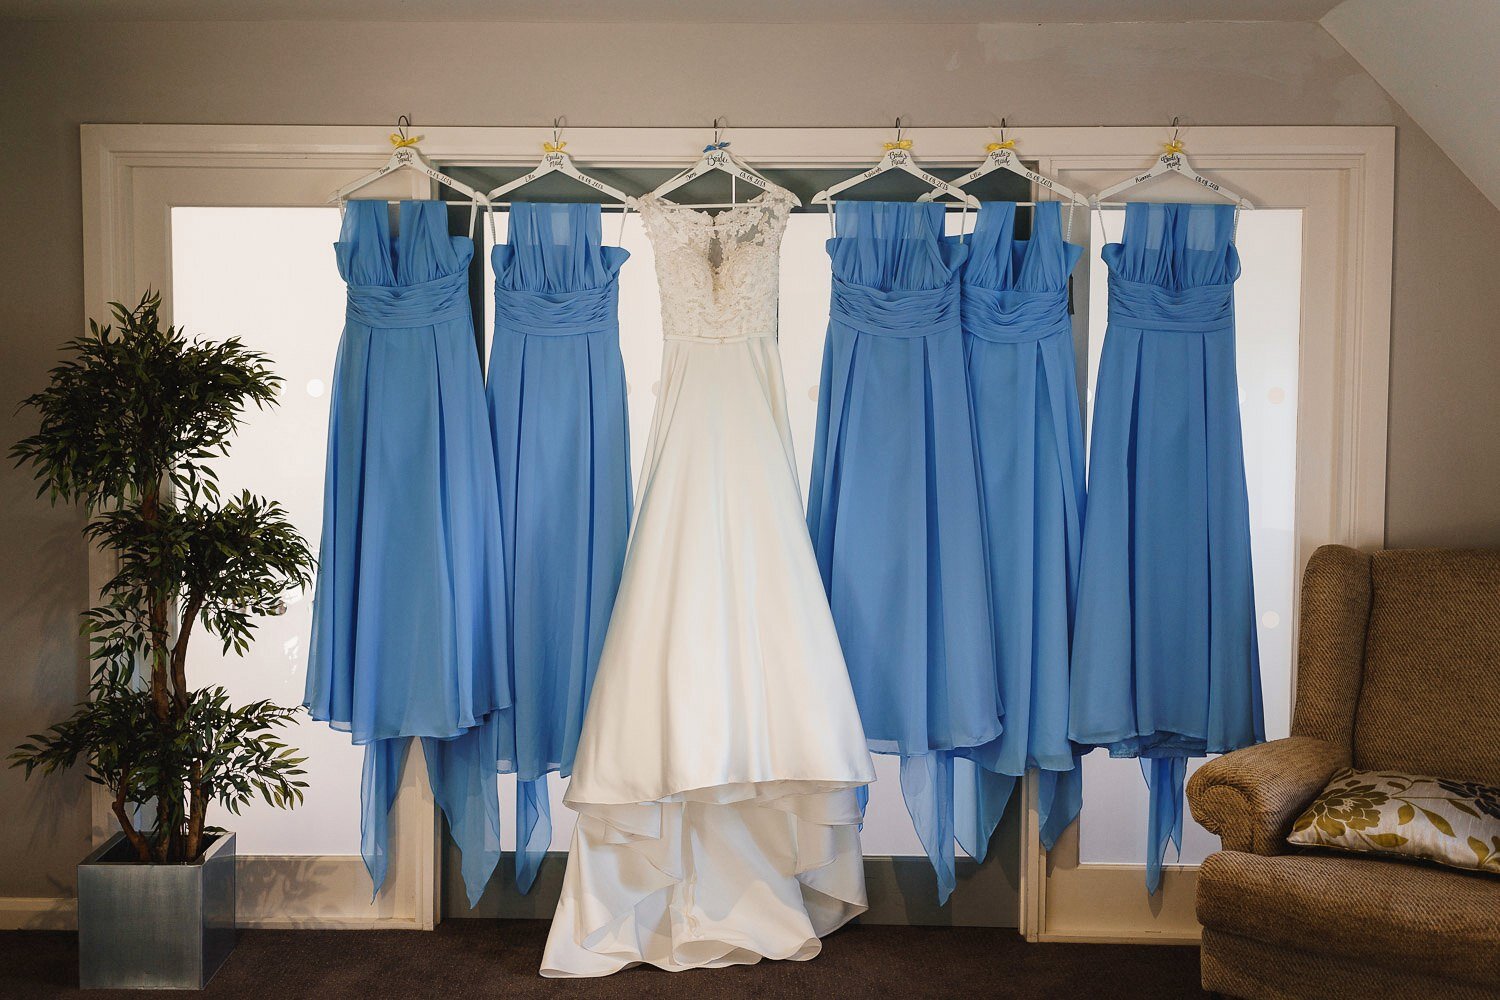 Brides and bridesmaids dresses